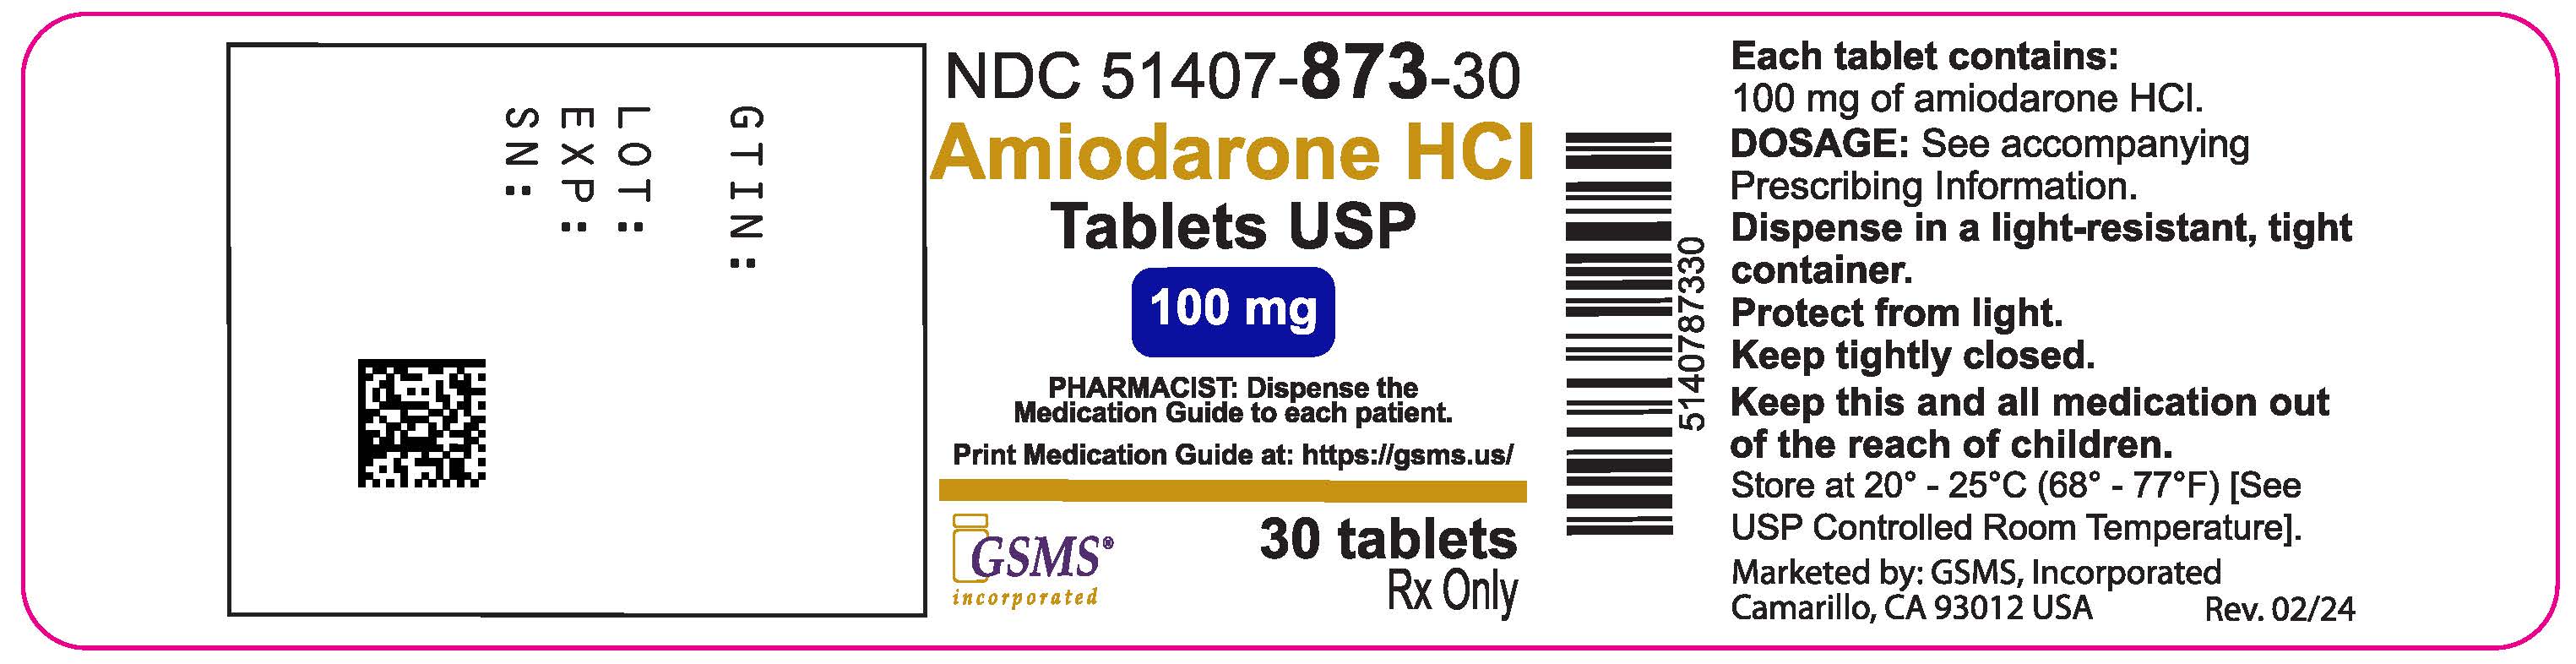 51407-873-30OL - Amiodarone HCl - Rev. 0224.jpg